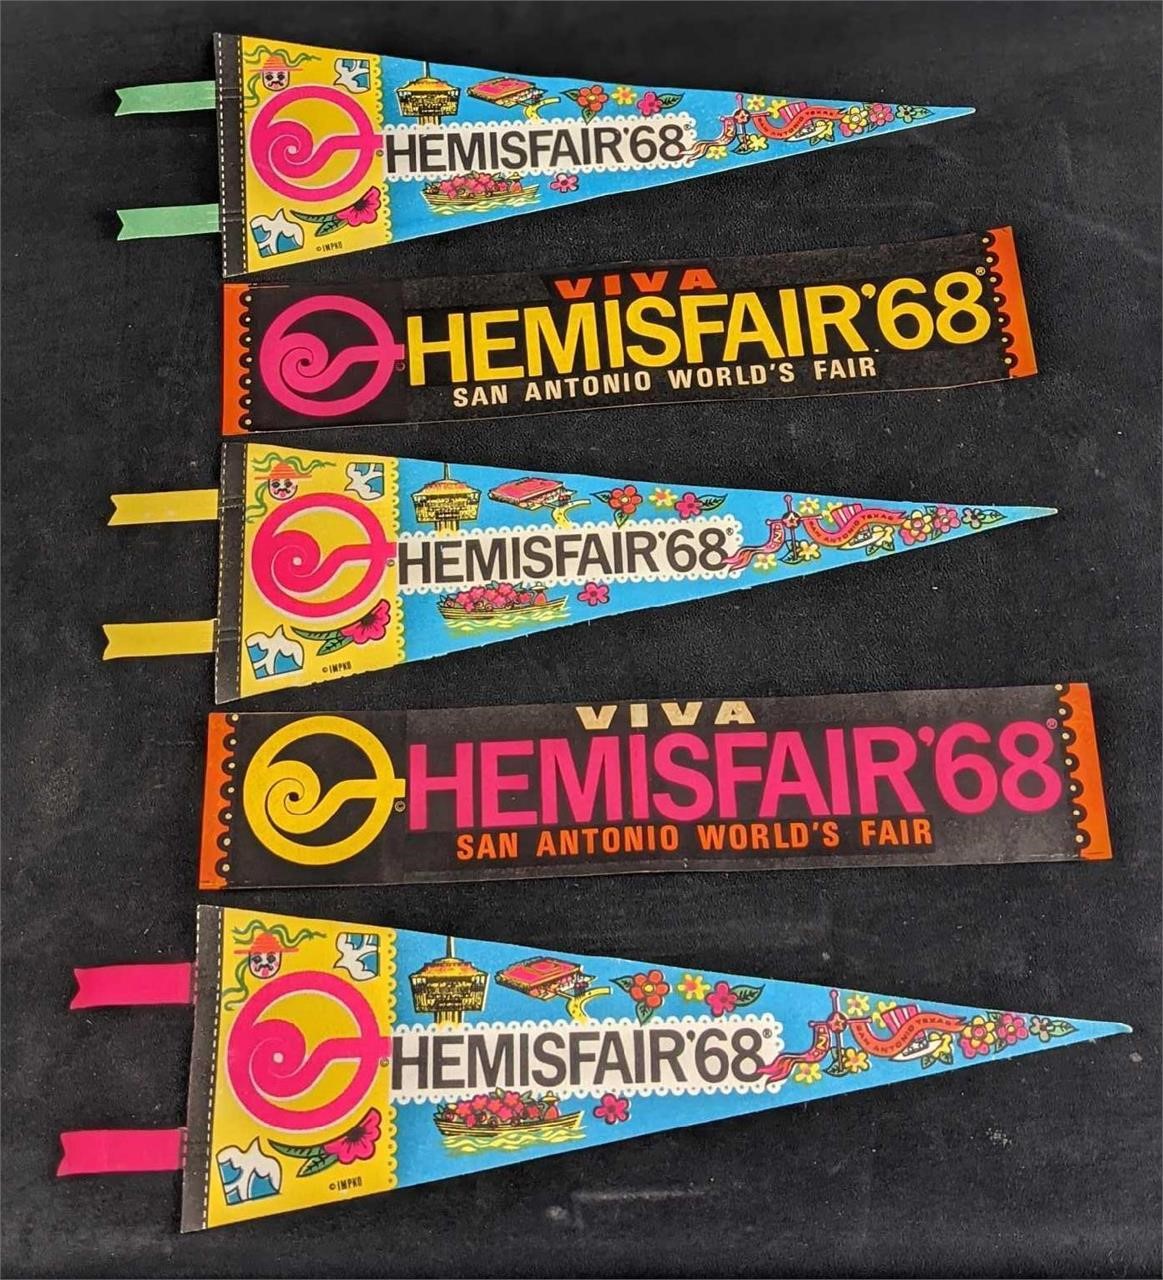 HemisFair '68 Worlds Fair Banners And Bumper Stick